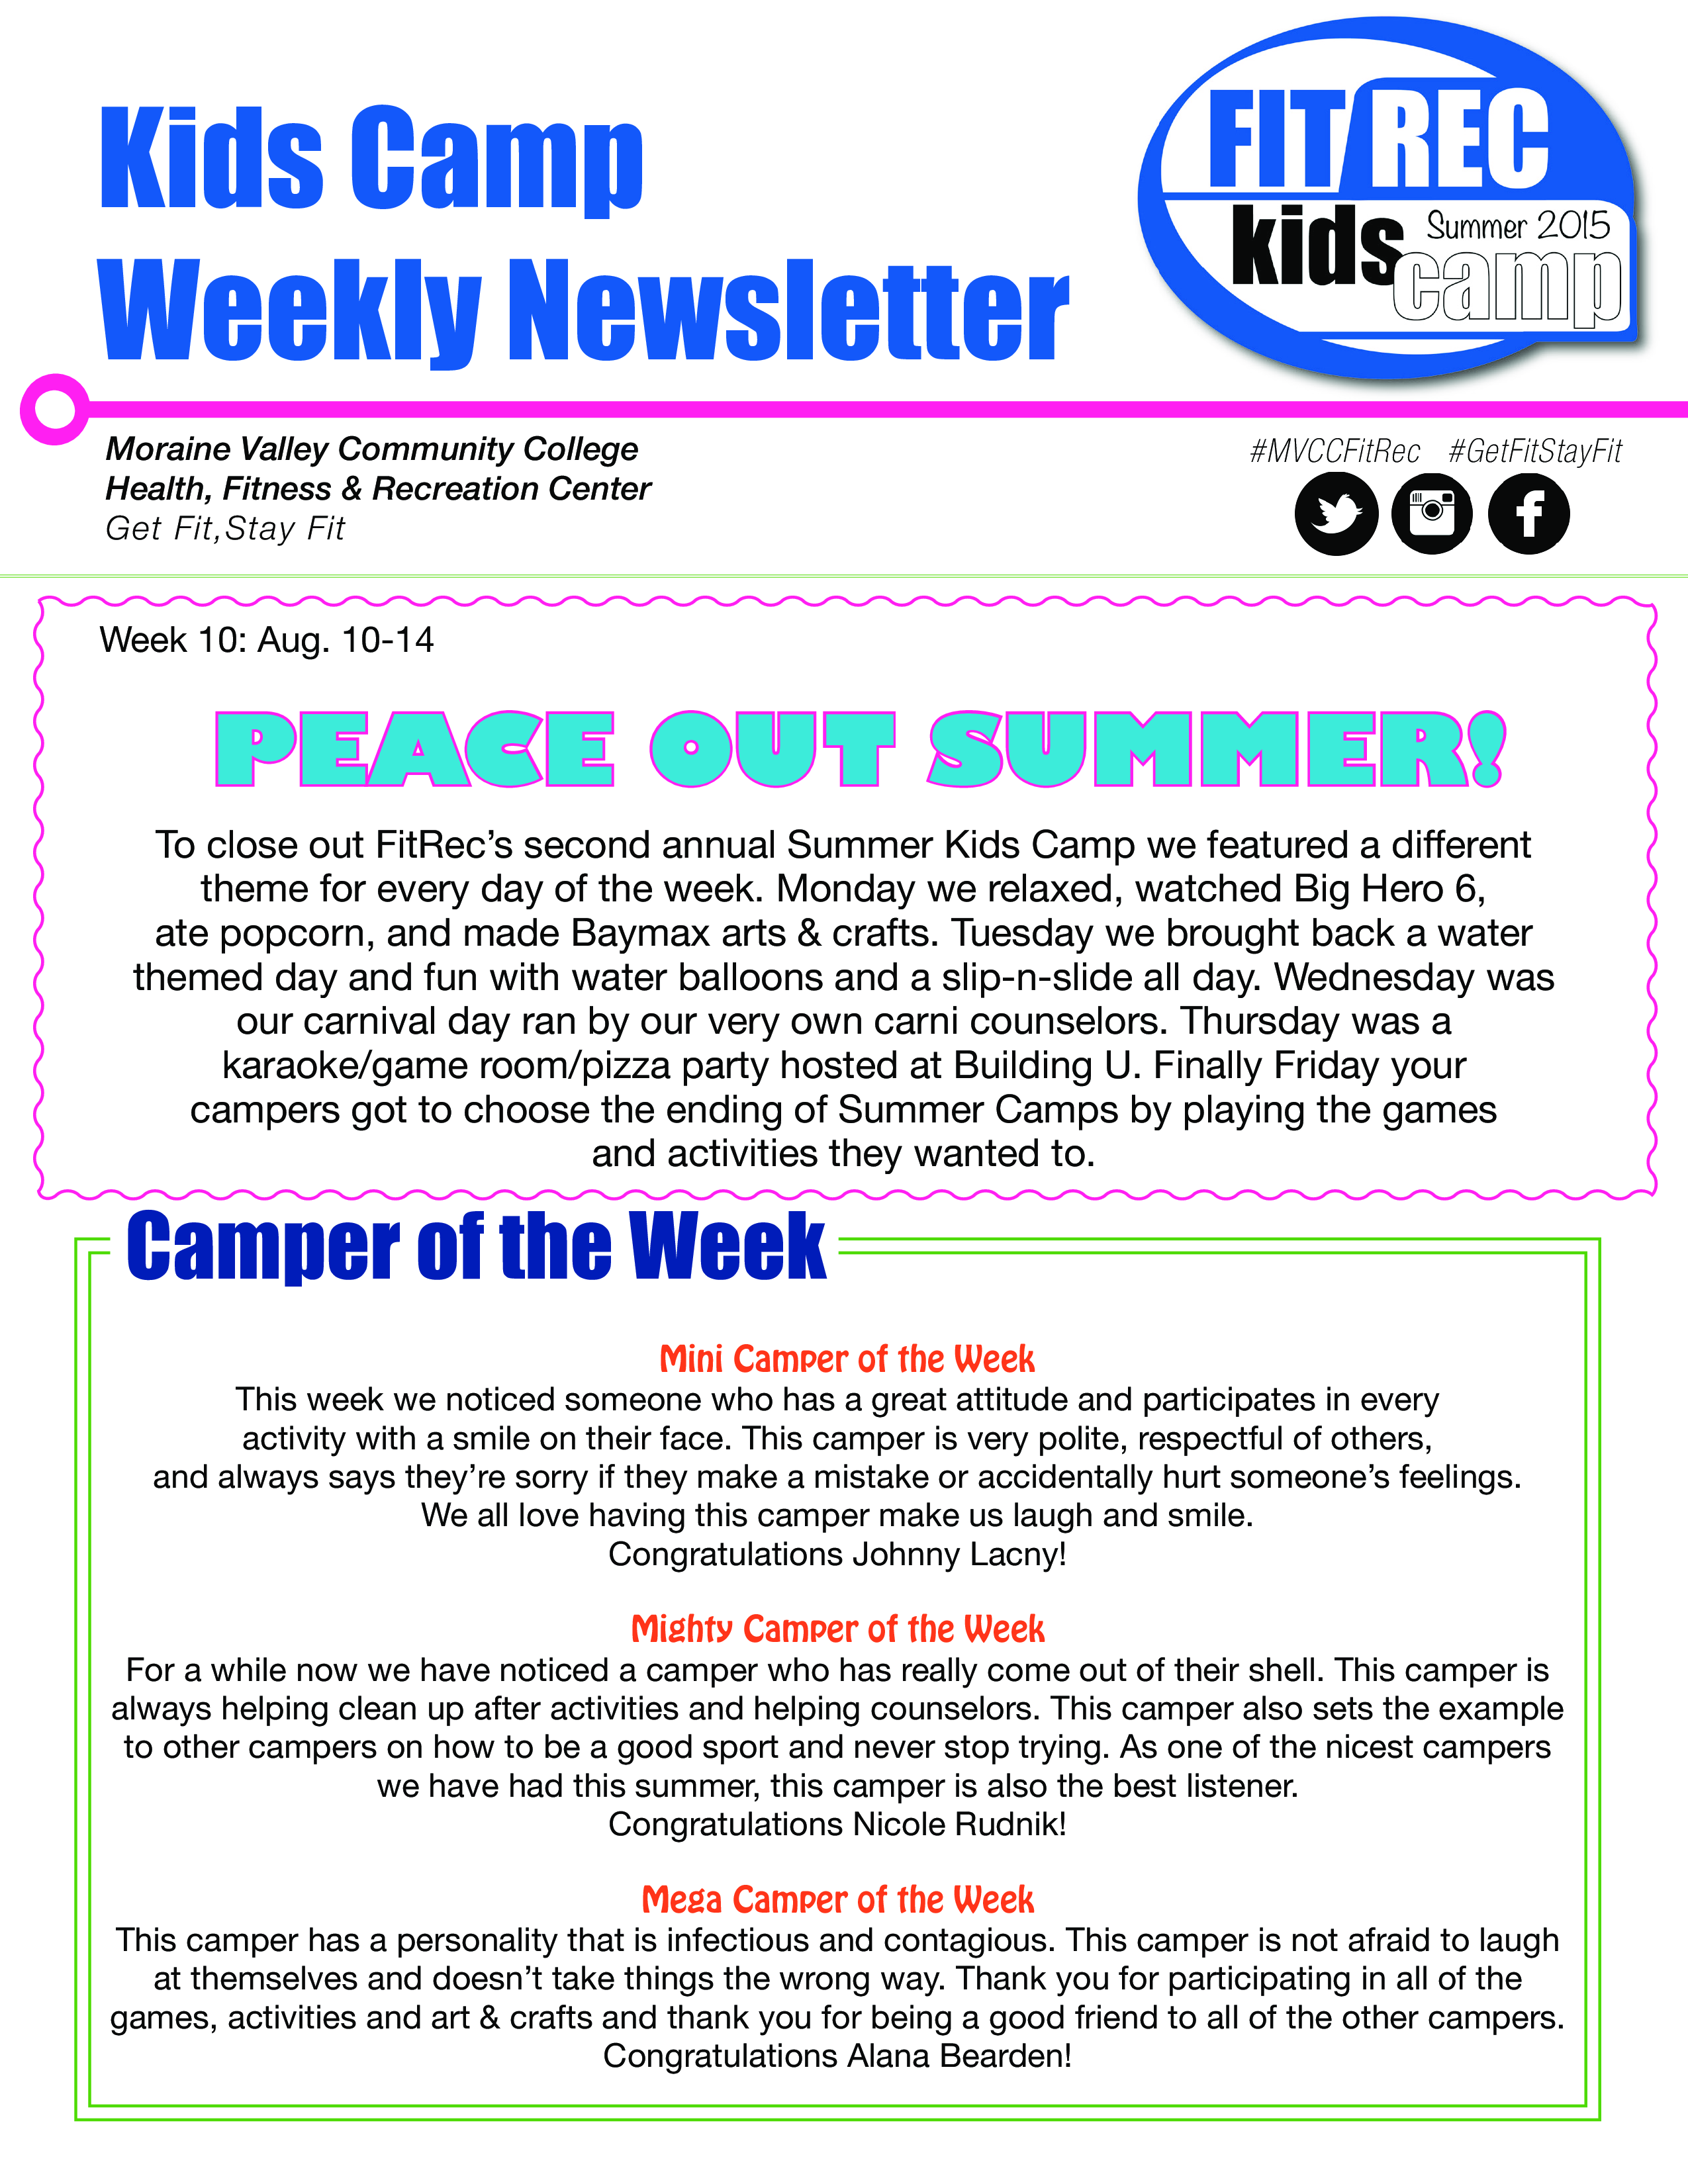 Newsletter Week main image